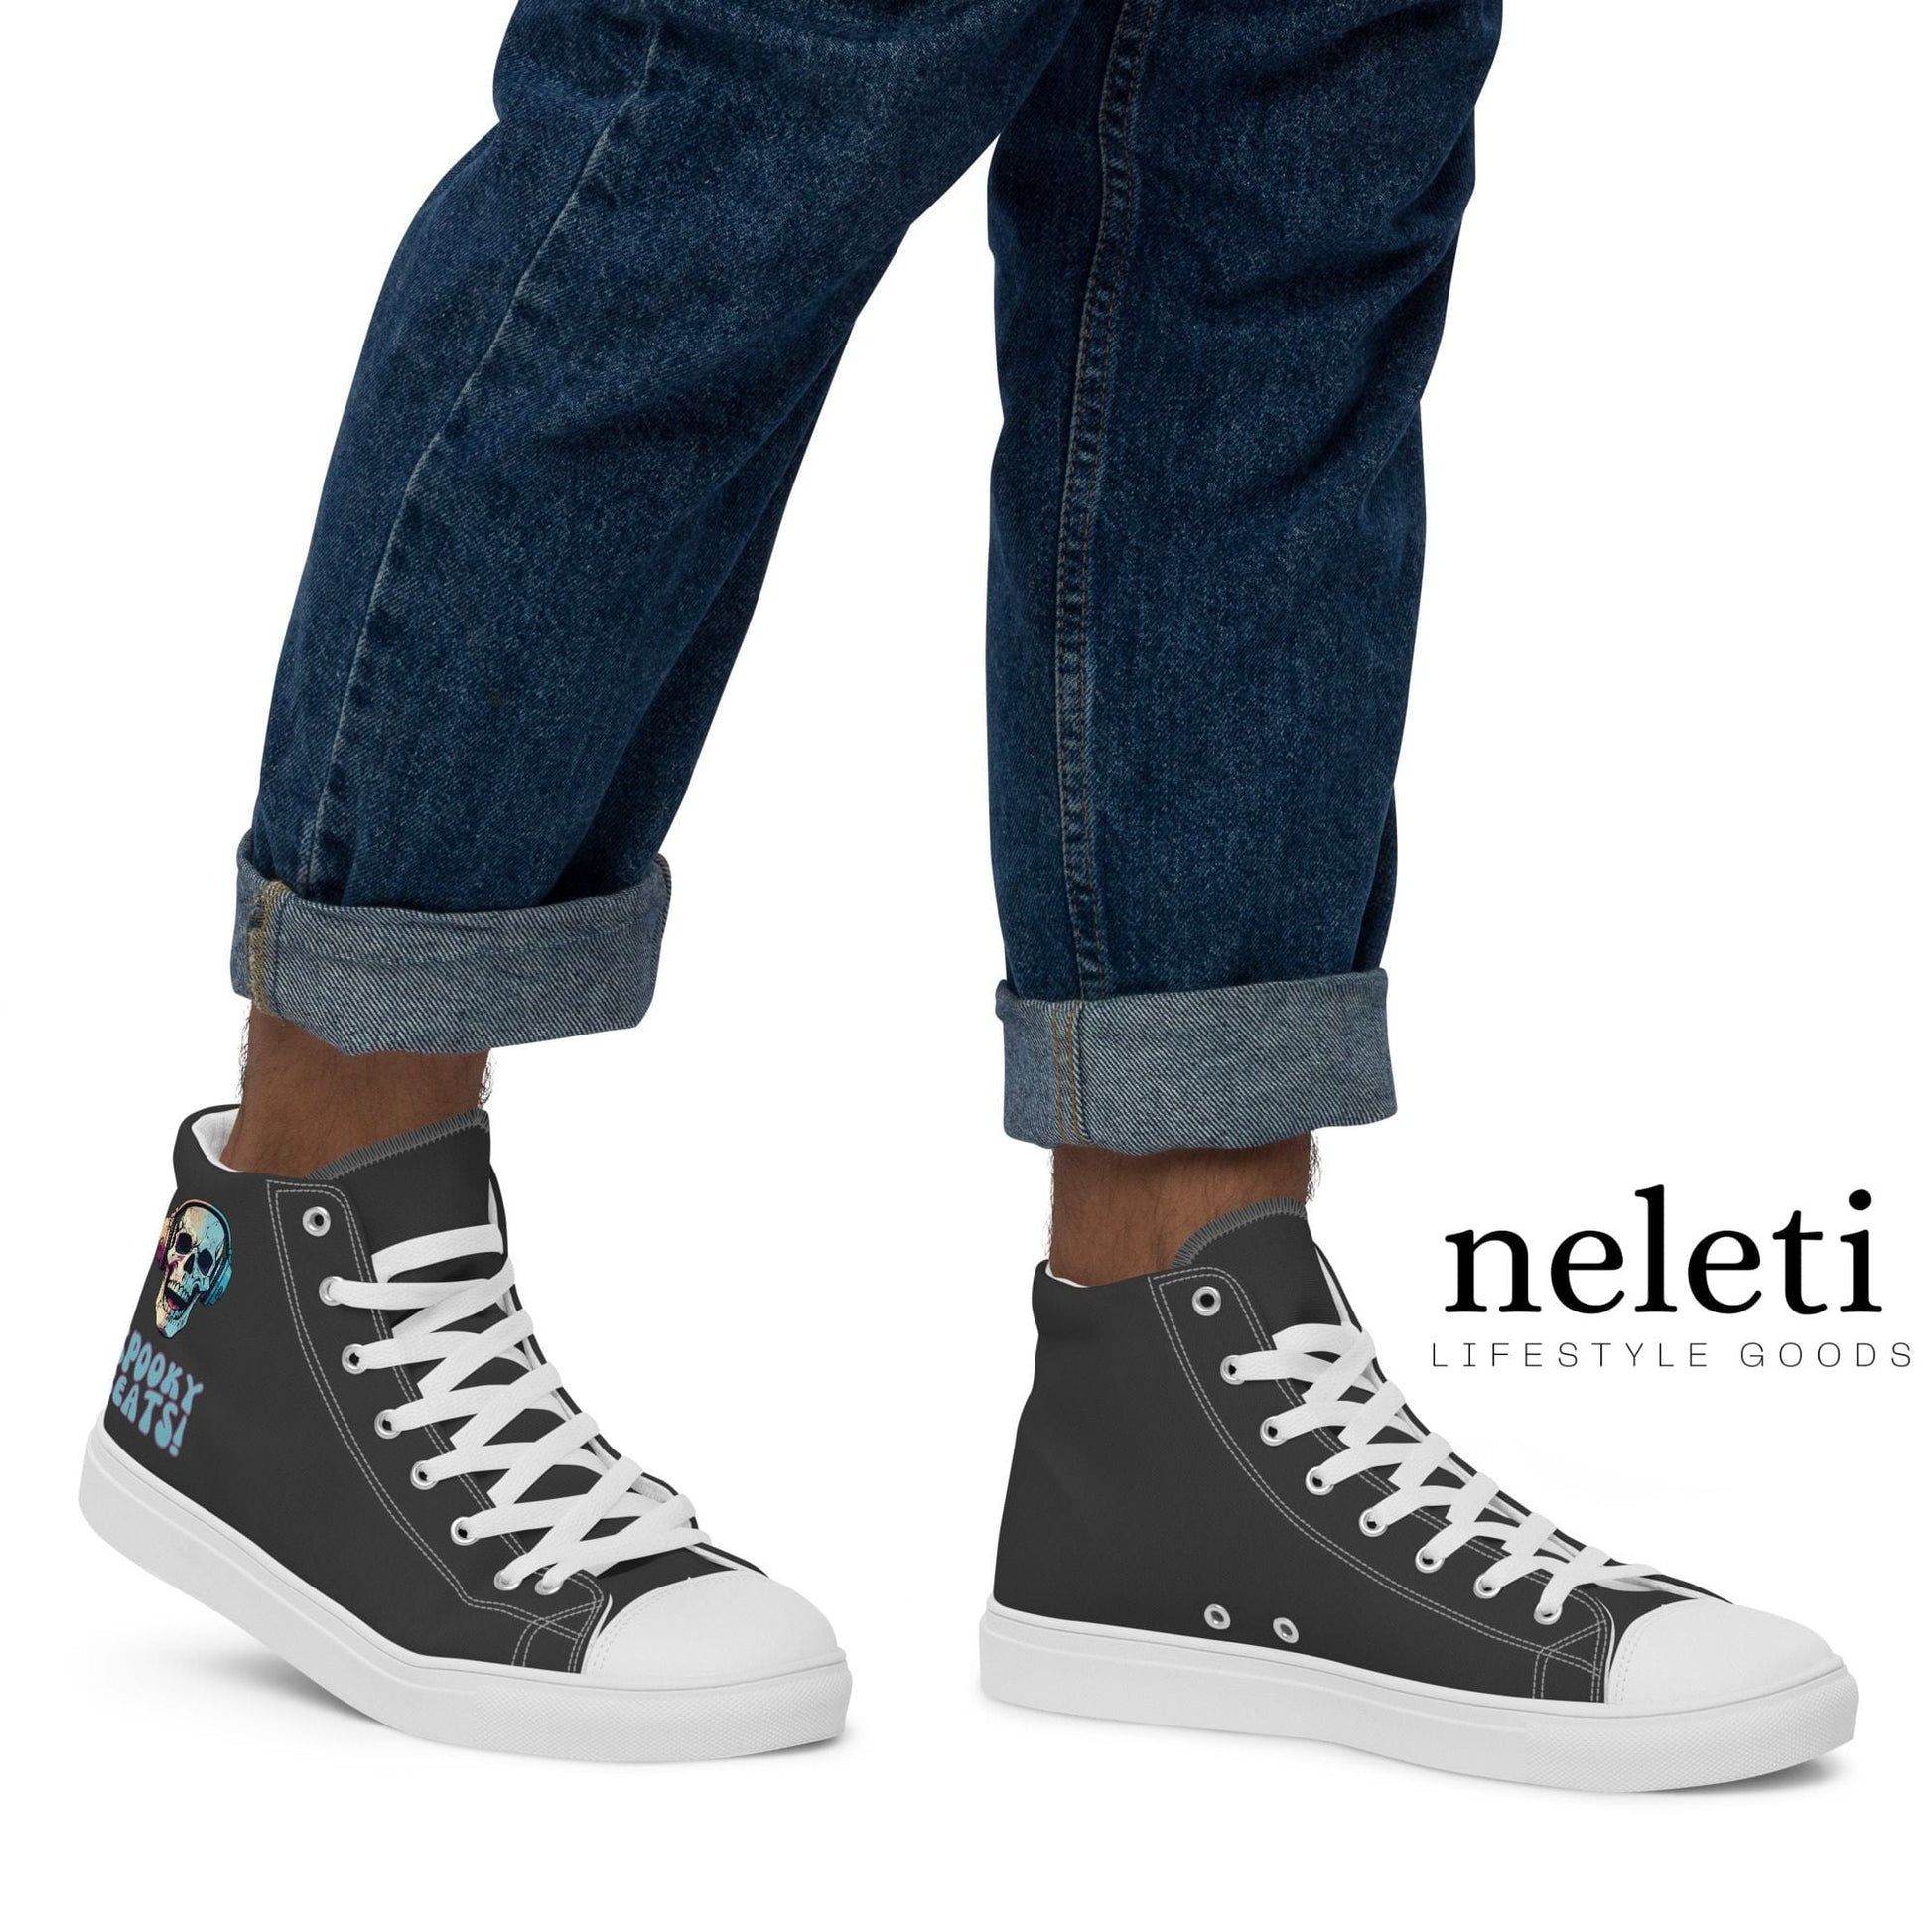 neleti.com-halloween-shoes-for-men